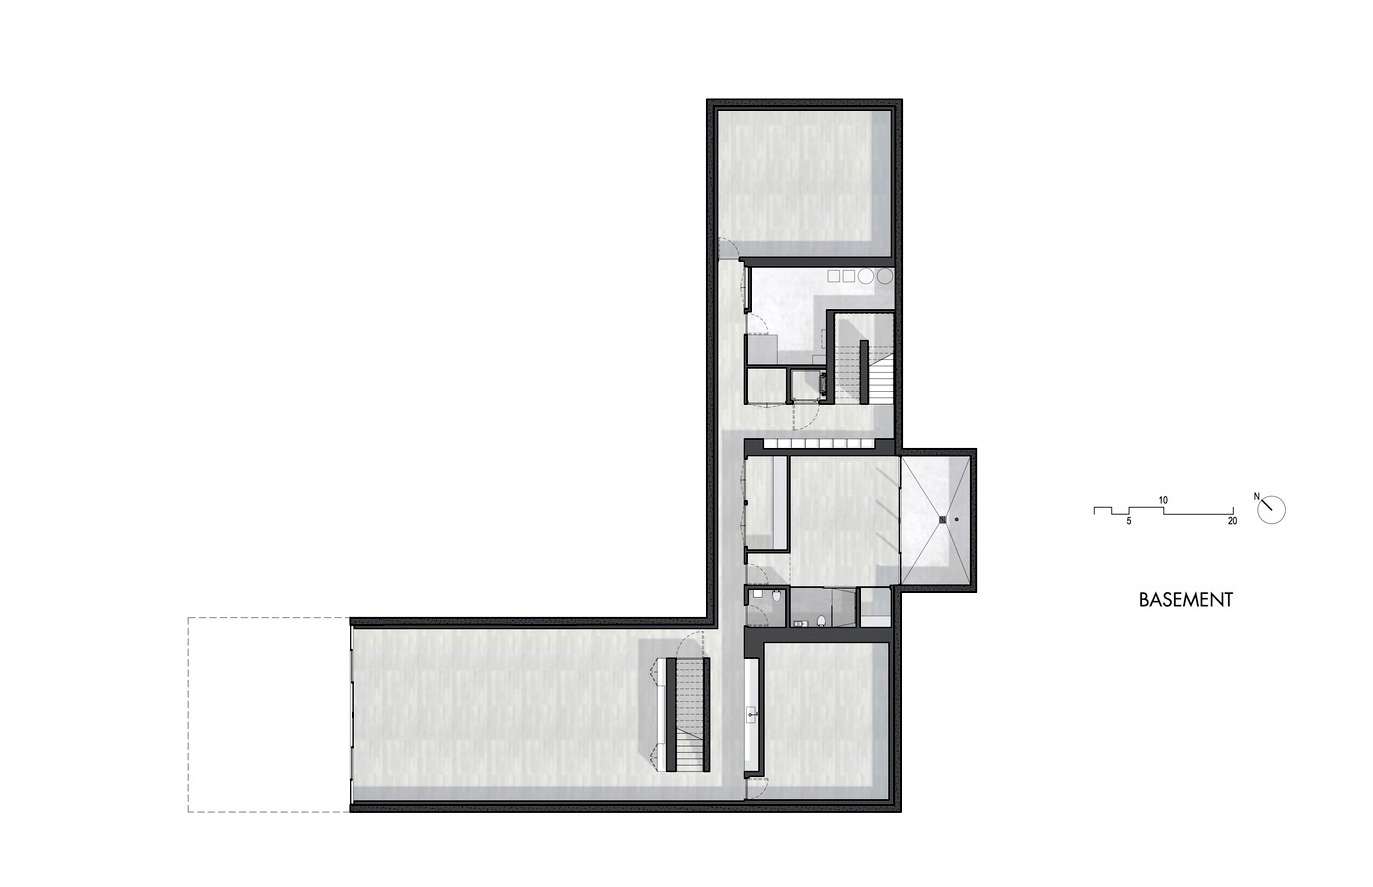 Basement Floor Plan - Oz House Luxury Residence - Ridge View Dr, Atherton, CA, USA